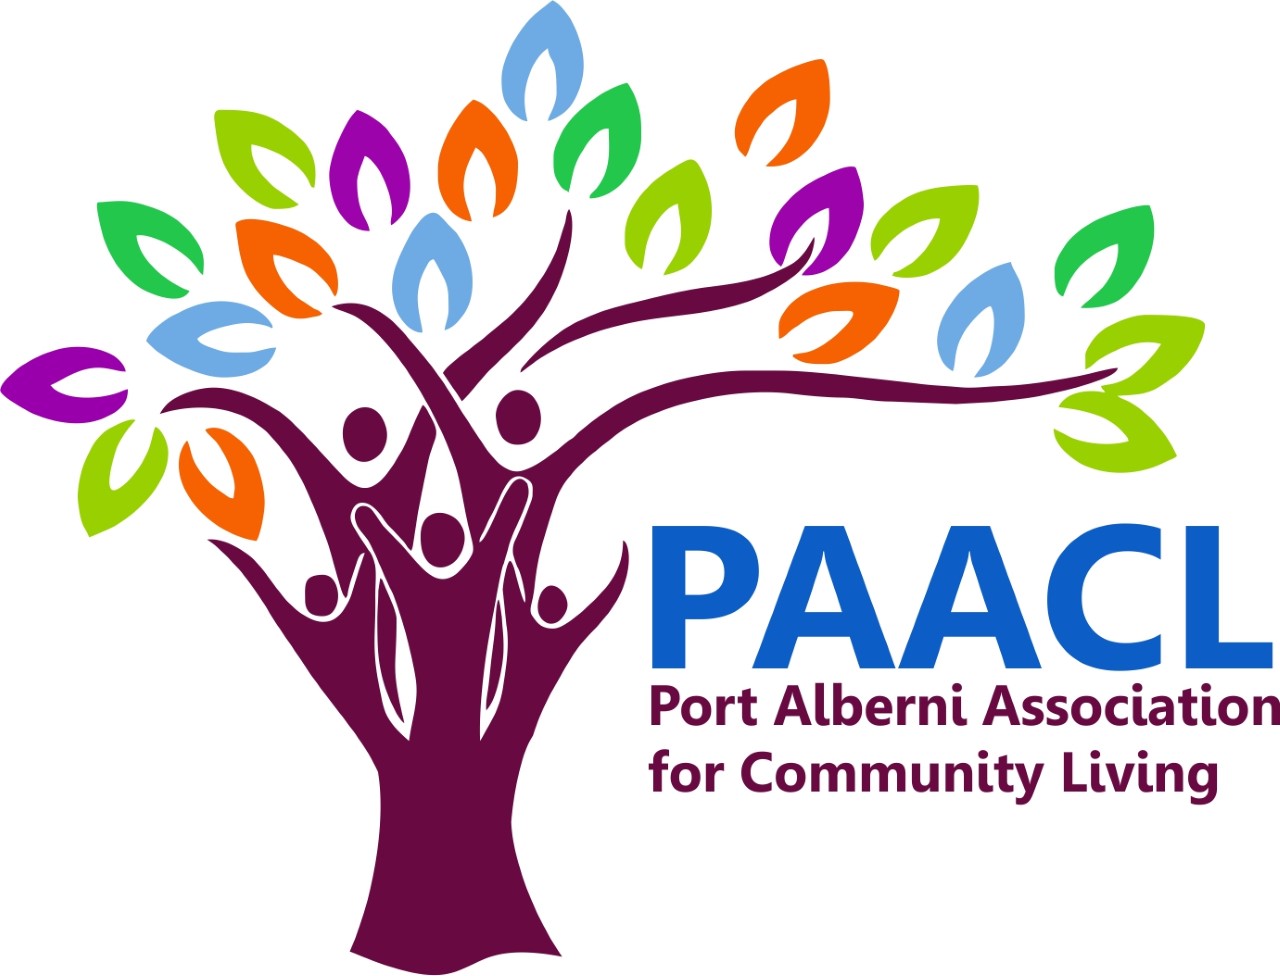 The Port Alberni Association for Community Living logo